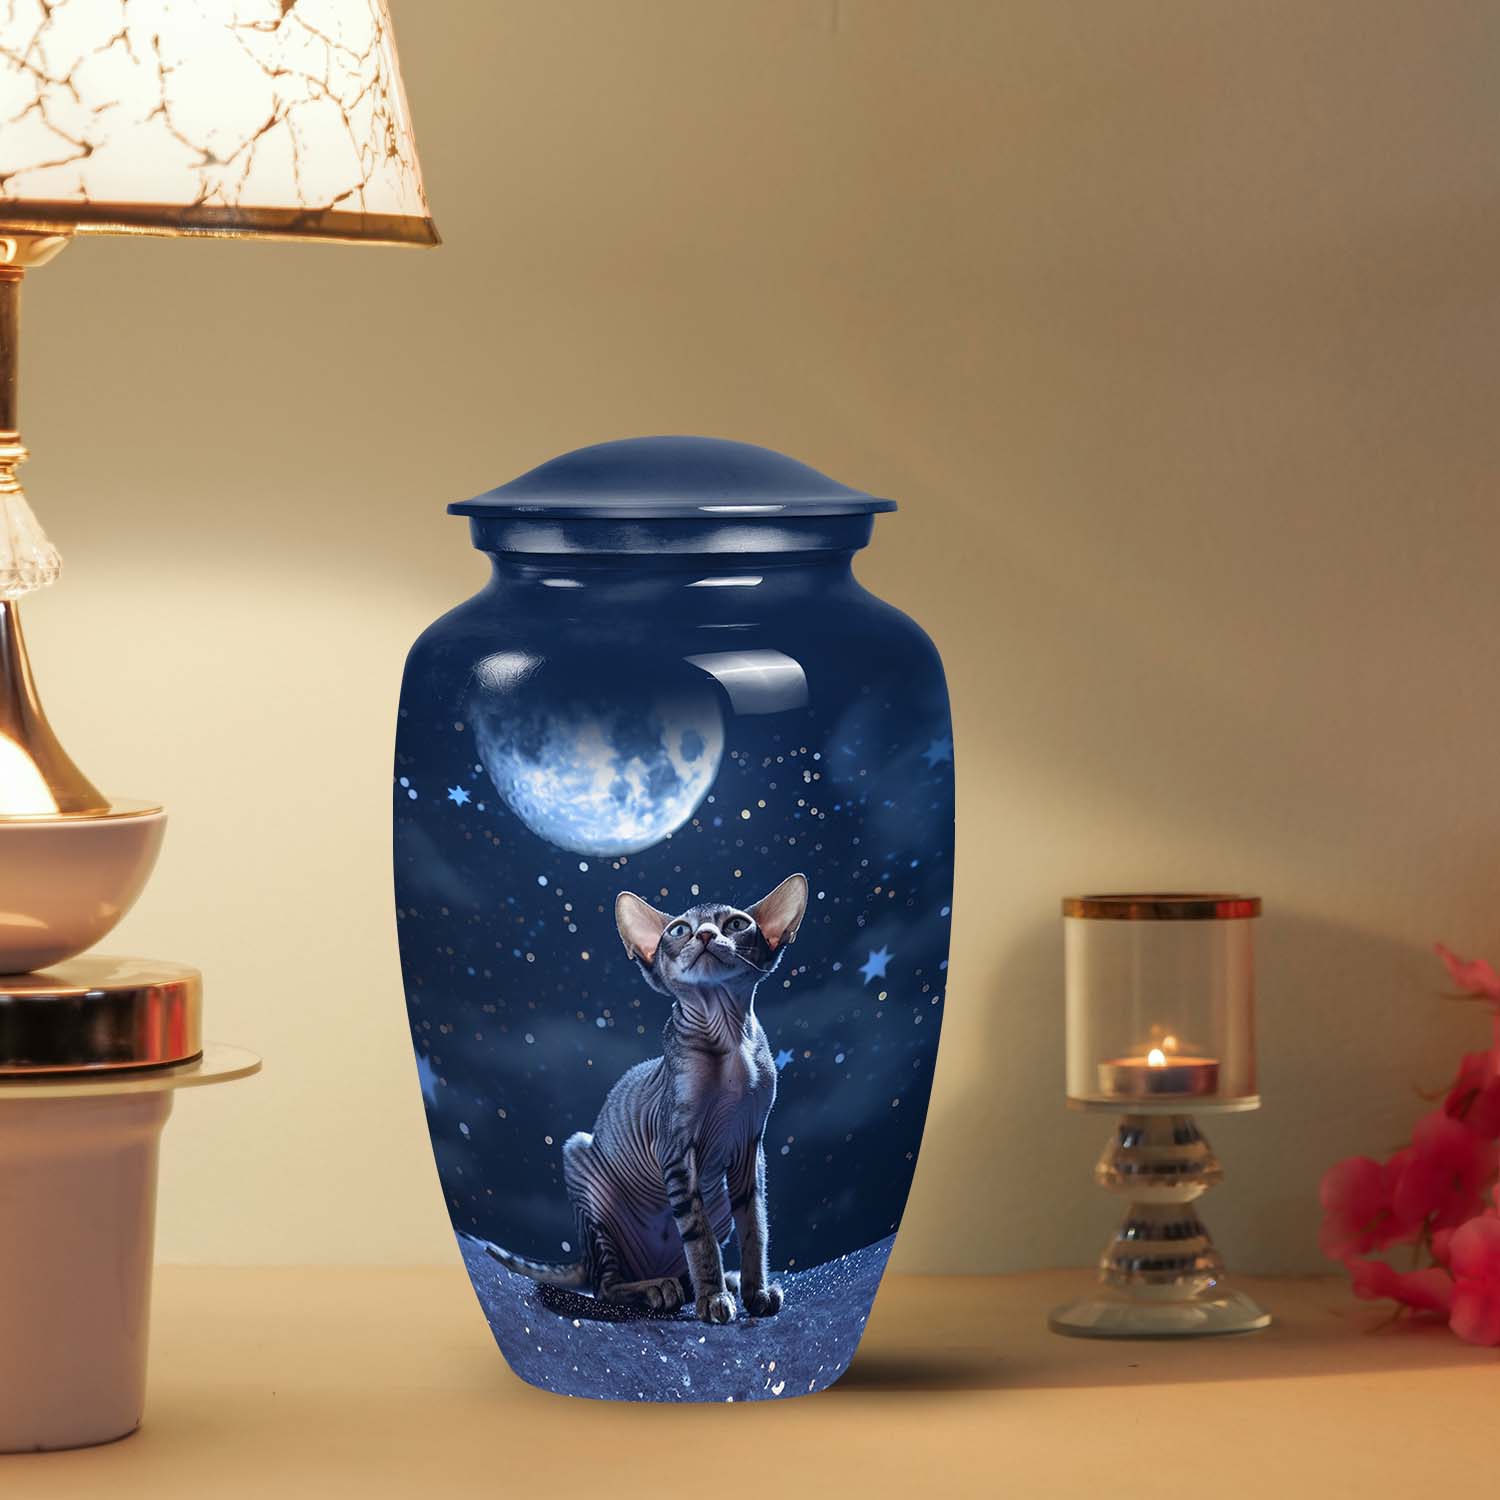 Unique Cat with Moon designed large pet Urn for cat cremation